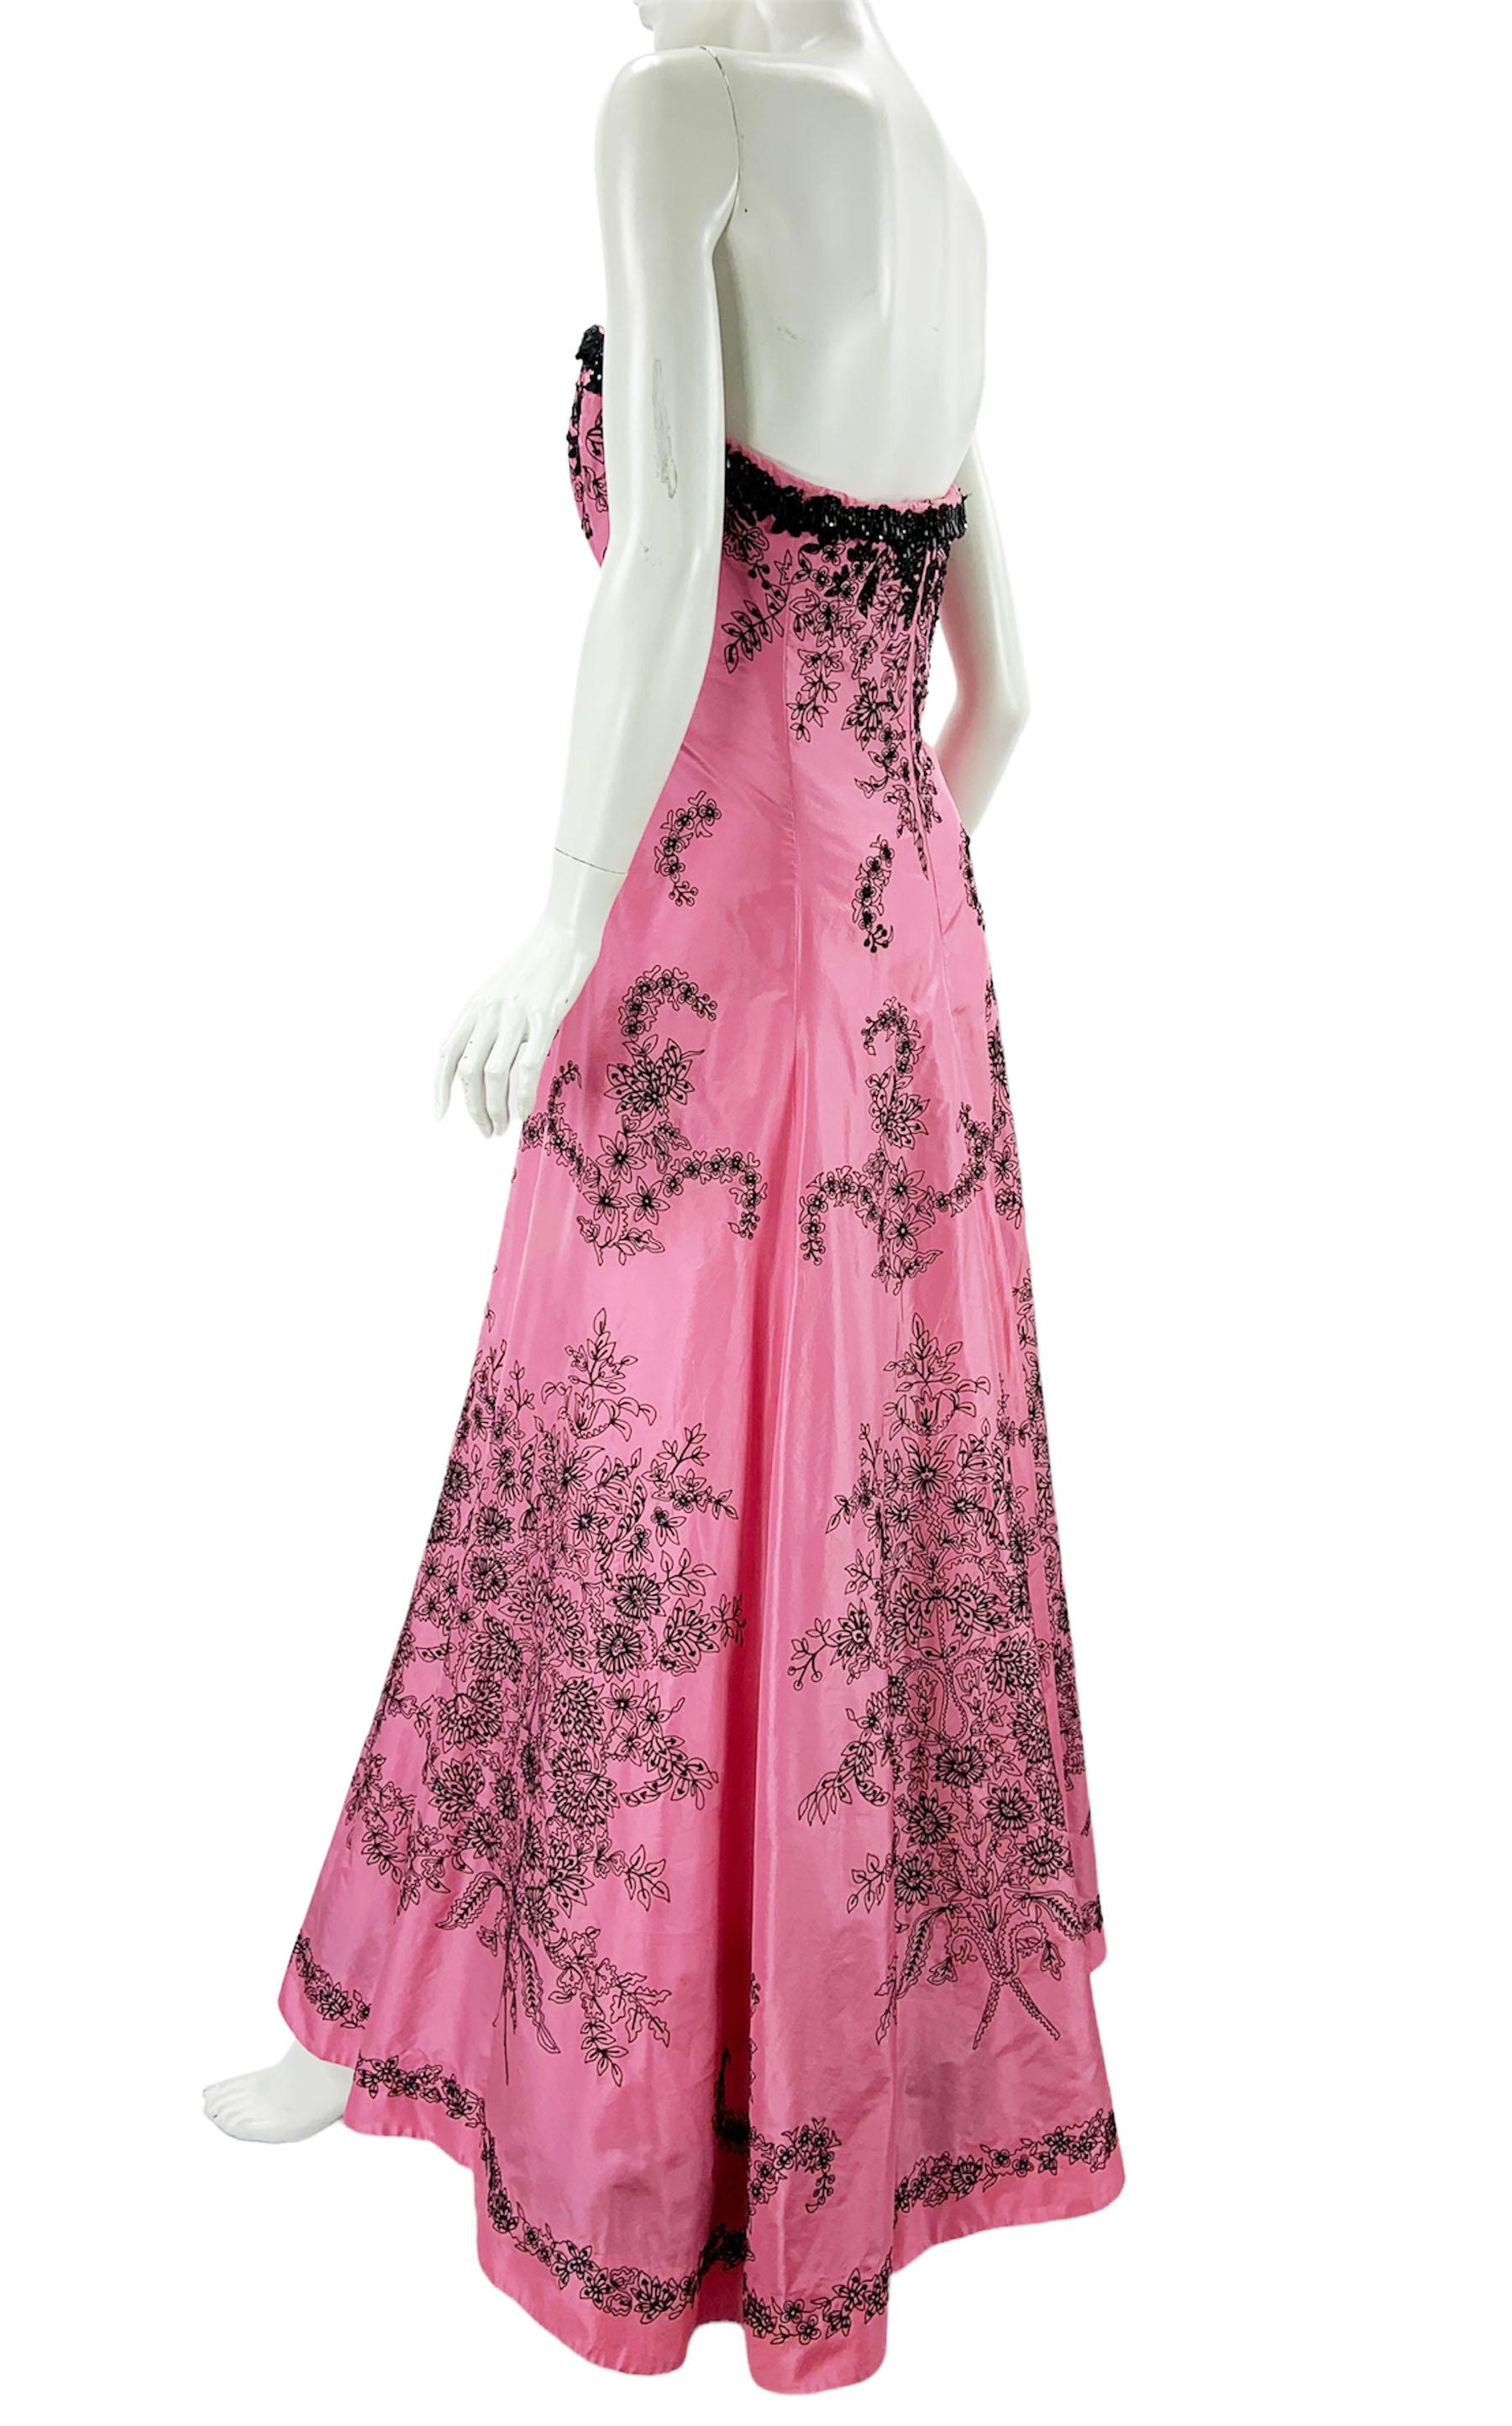 Oscar de la Renta S/S 2004 Collection Pink Silk Taffeta Embellished Dress Gown 8 For Sale 1